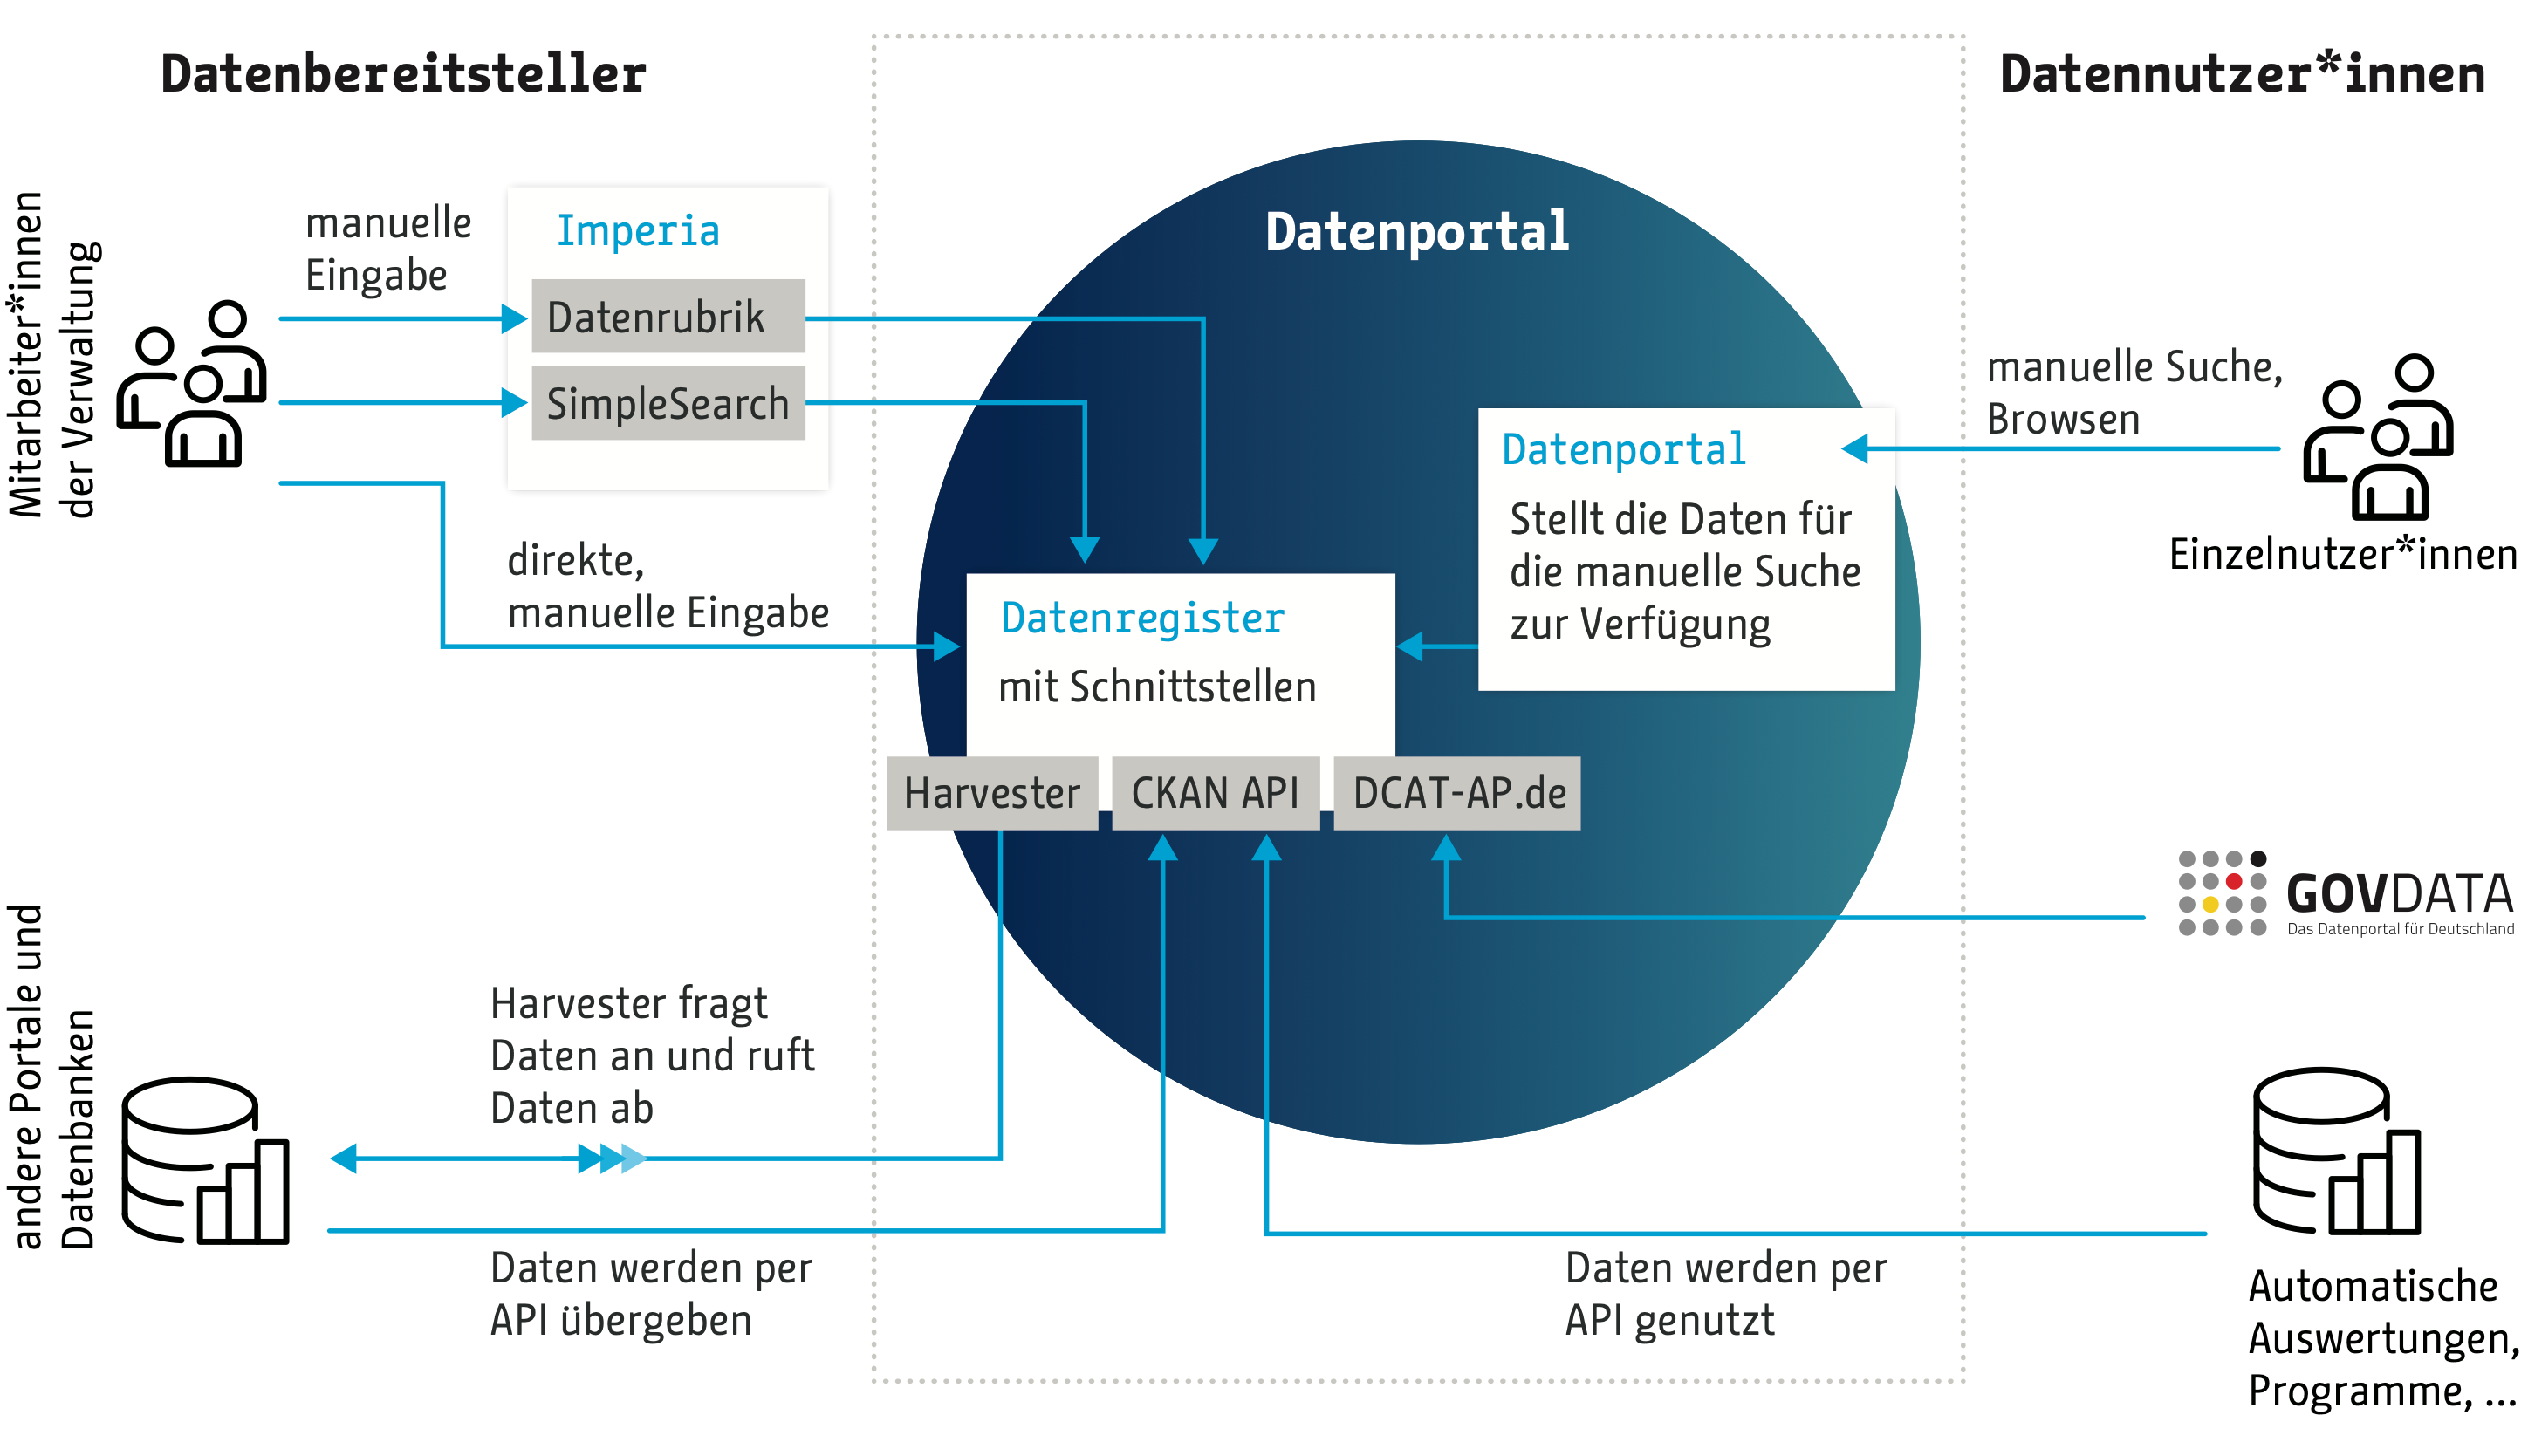 Der Weg der Metadaten im Berliner Datenportal